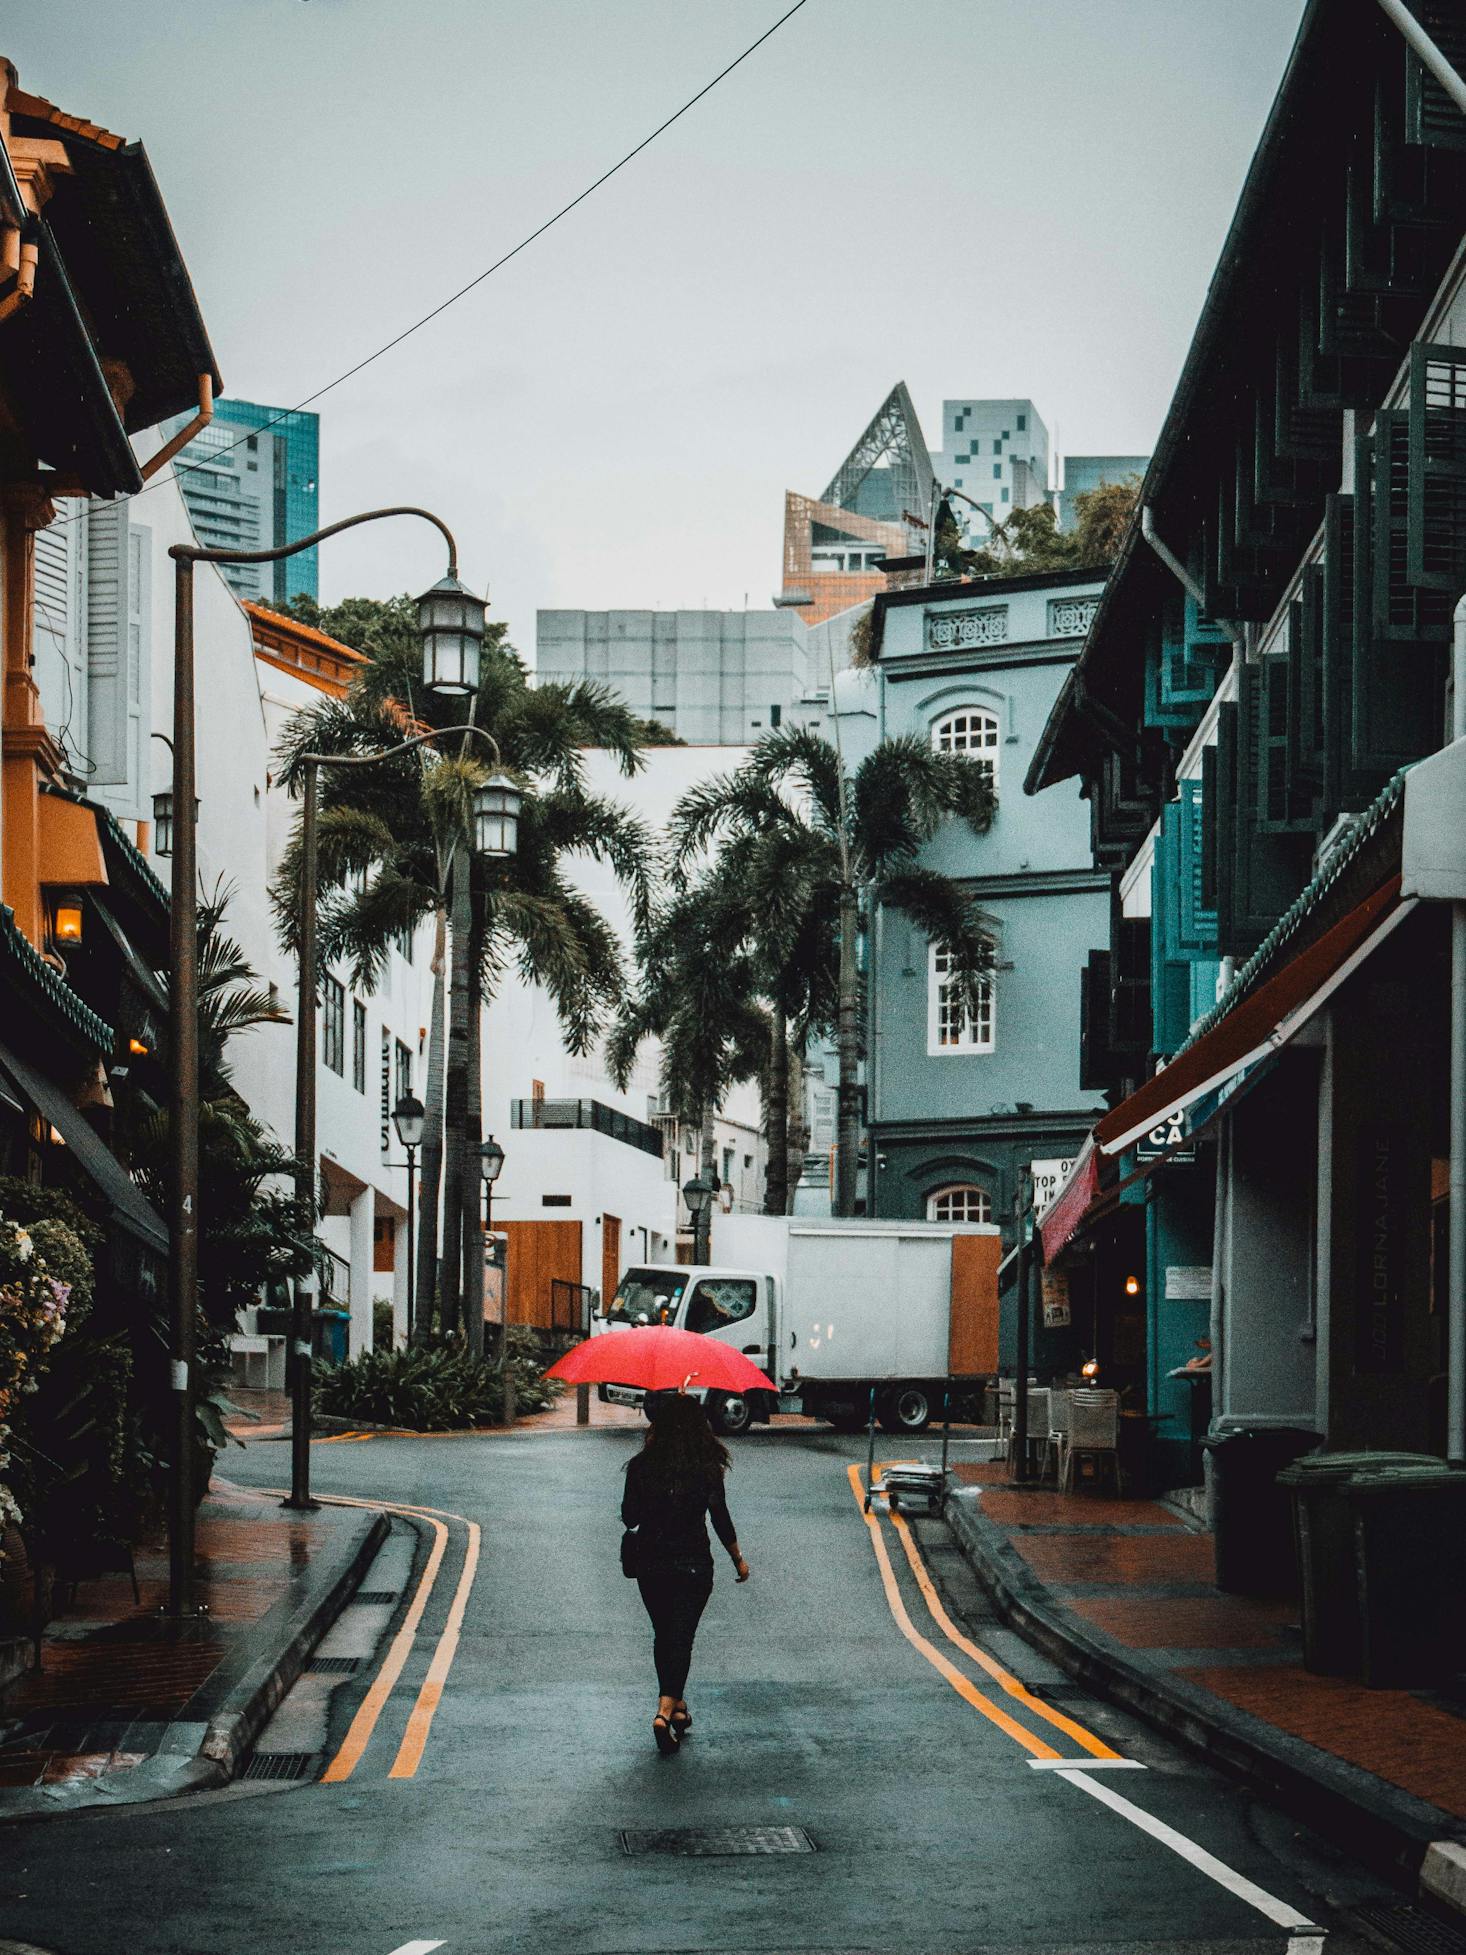 Rainy street in Singapore